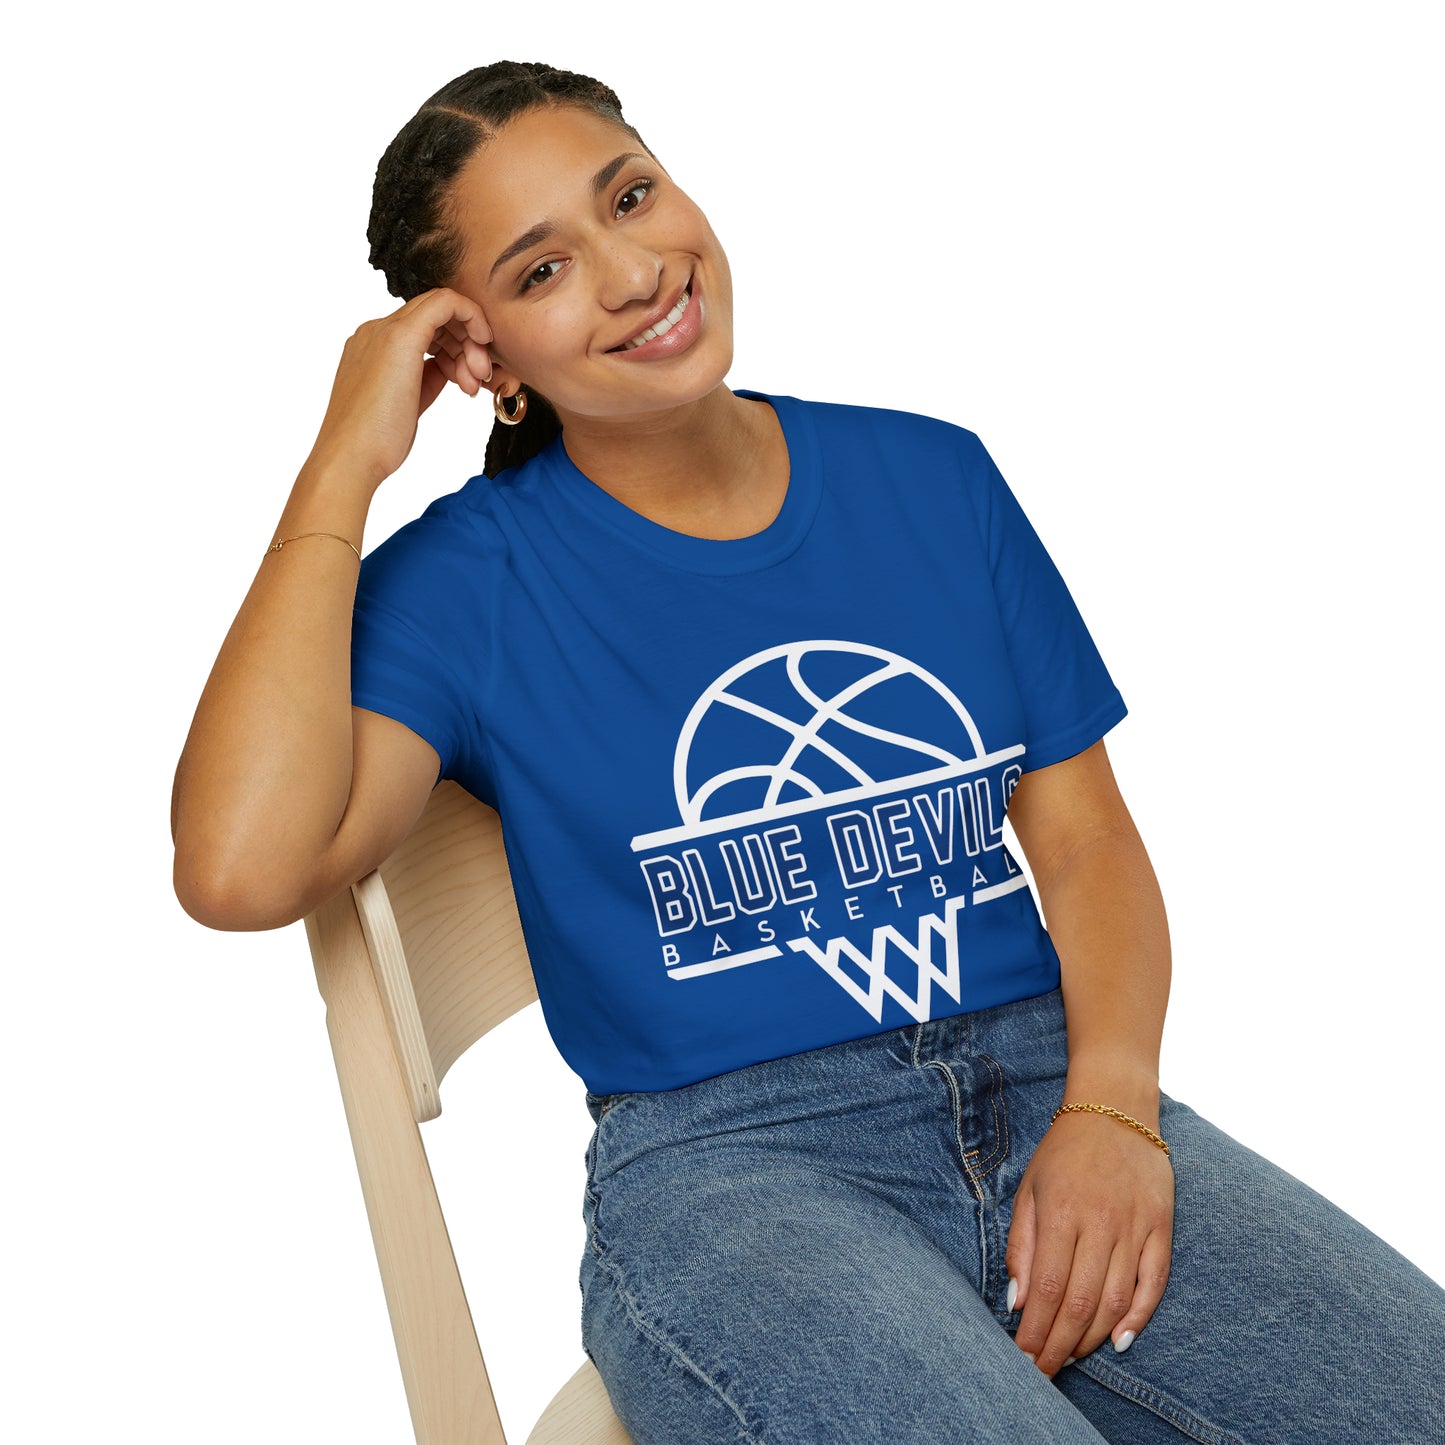 Blue Devils Basketball Unisex Softstyle T-Shirt